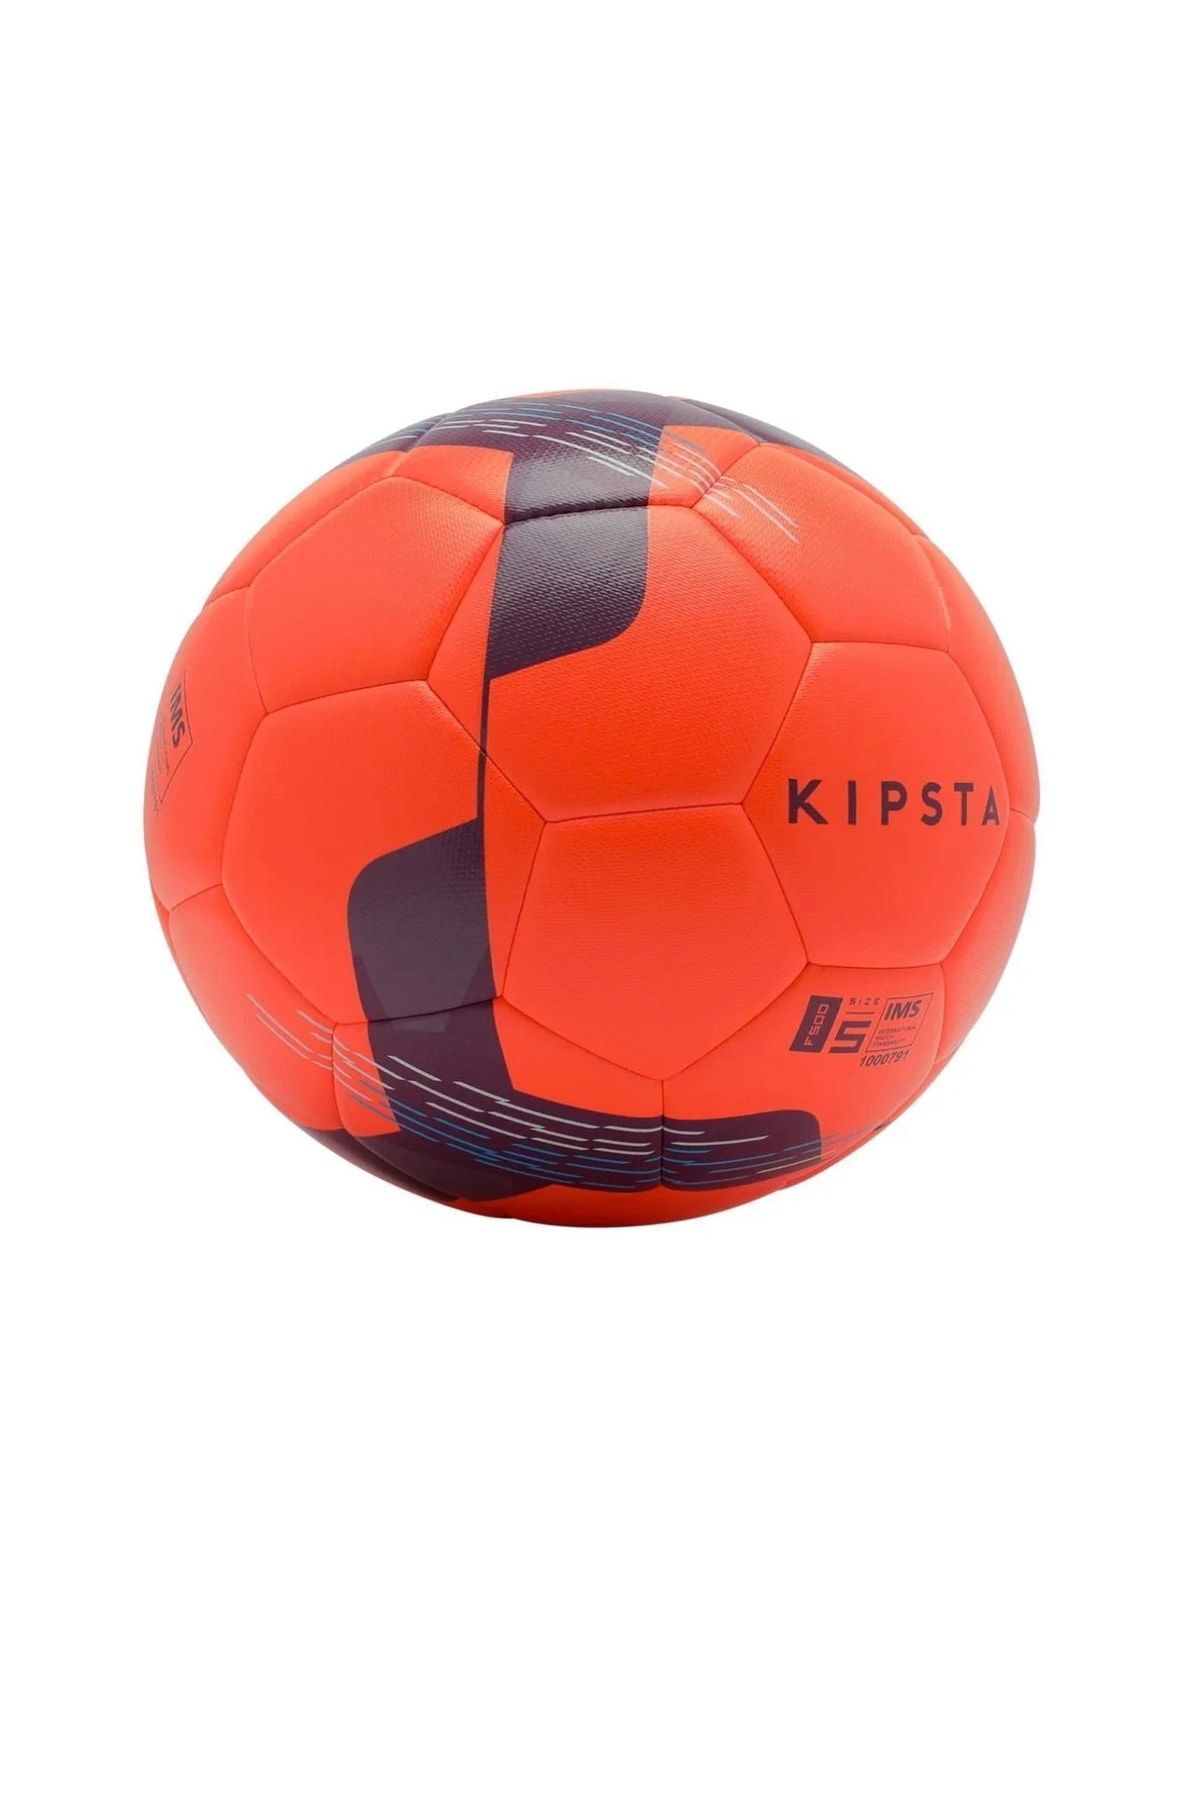 BEYHA COLLECTION Kipsta Futbol Topu 5 Numara - F500 Fifa Basic